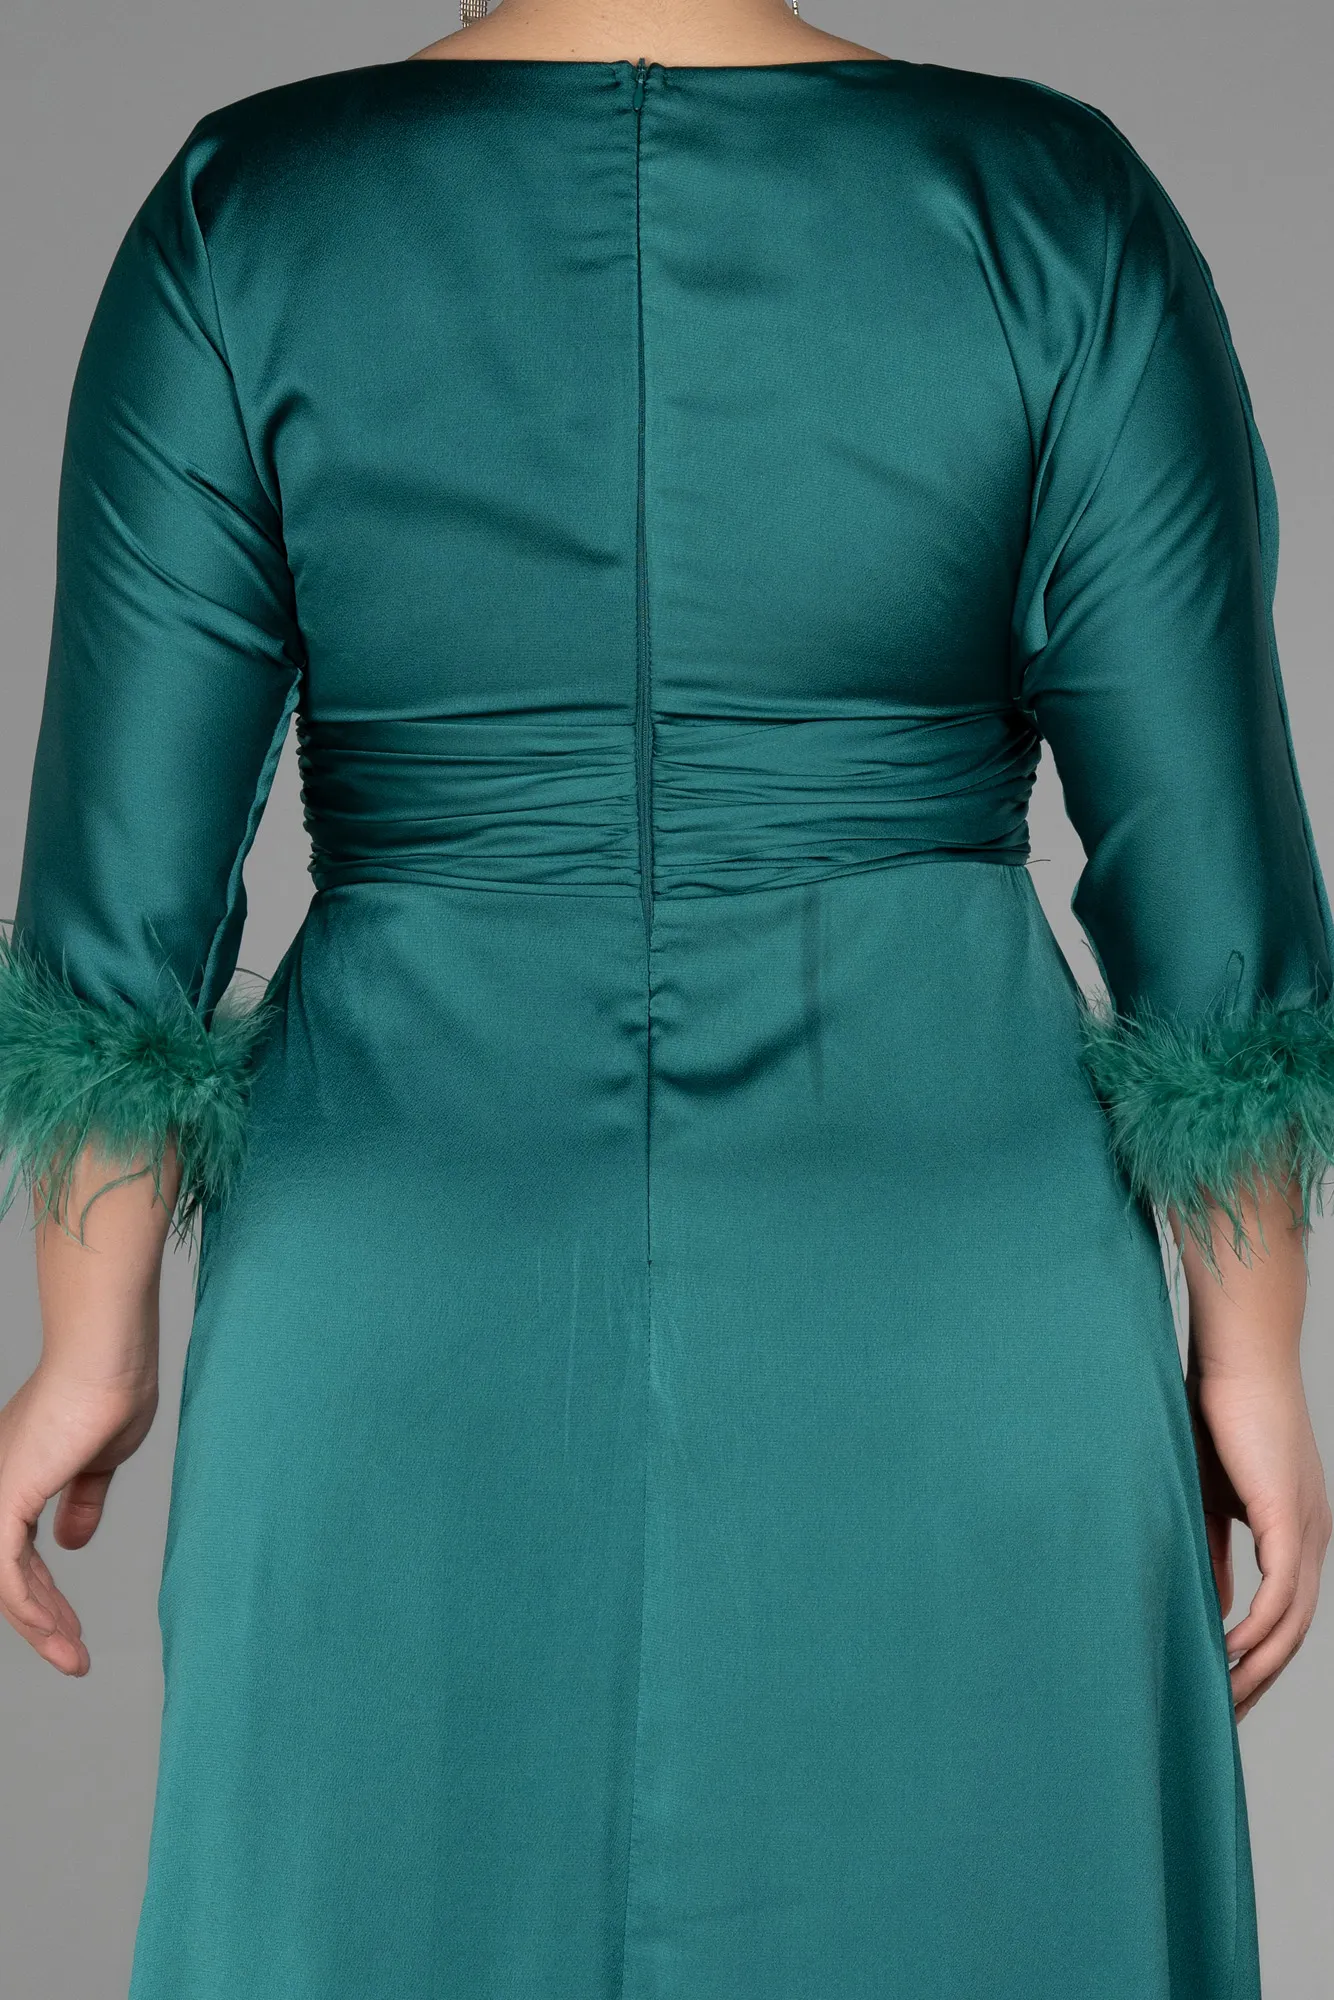 Emerald Green-Long Satin Plus Size Evening Dress ABU3367